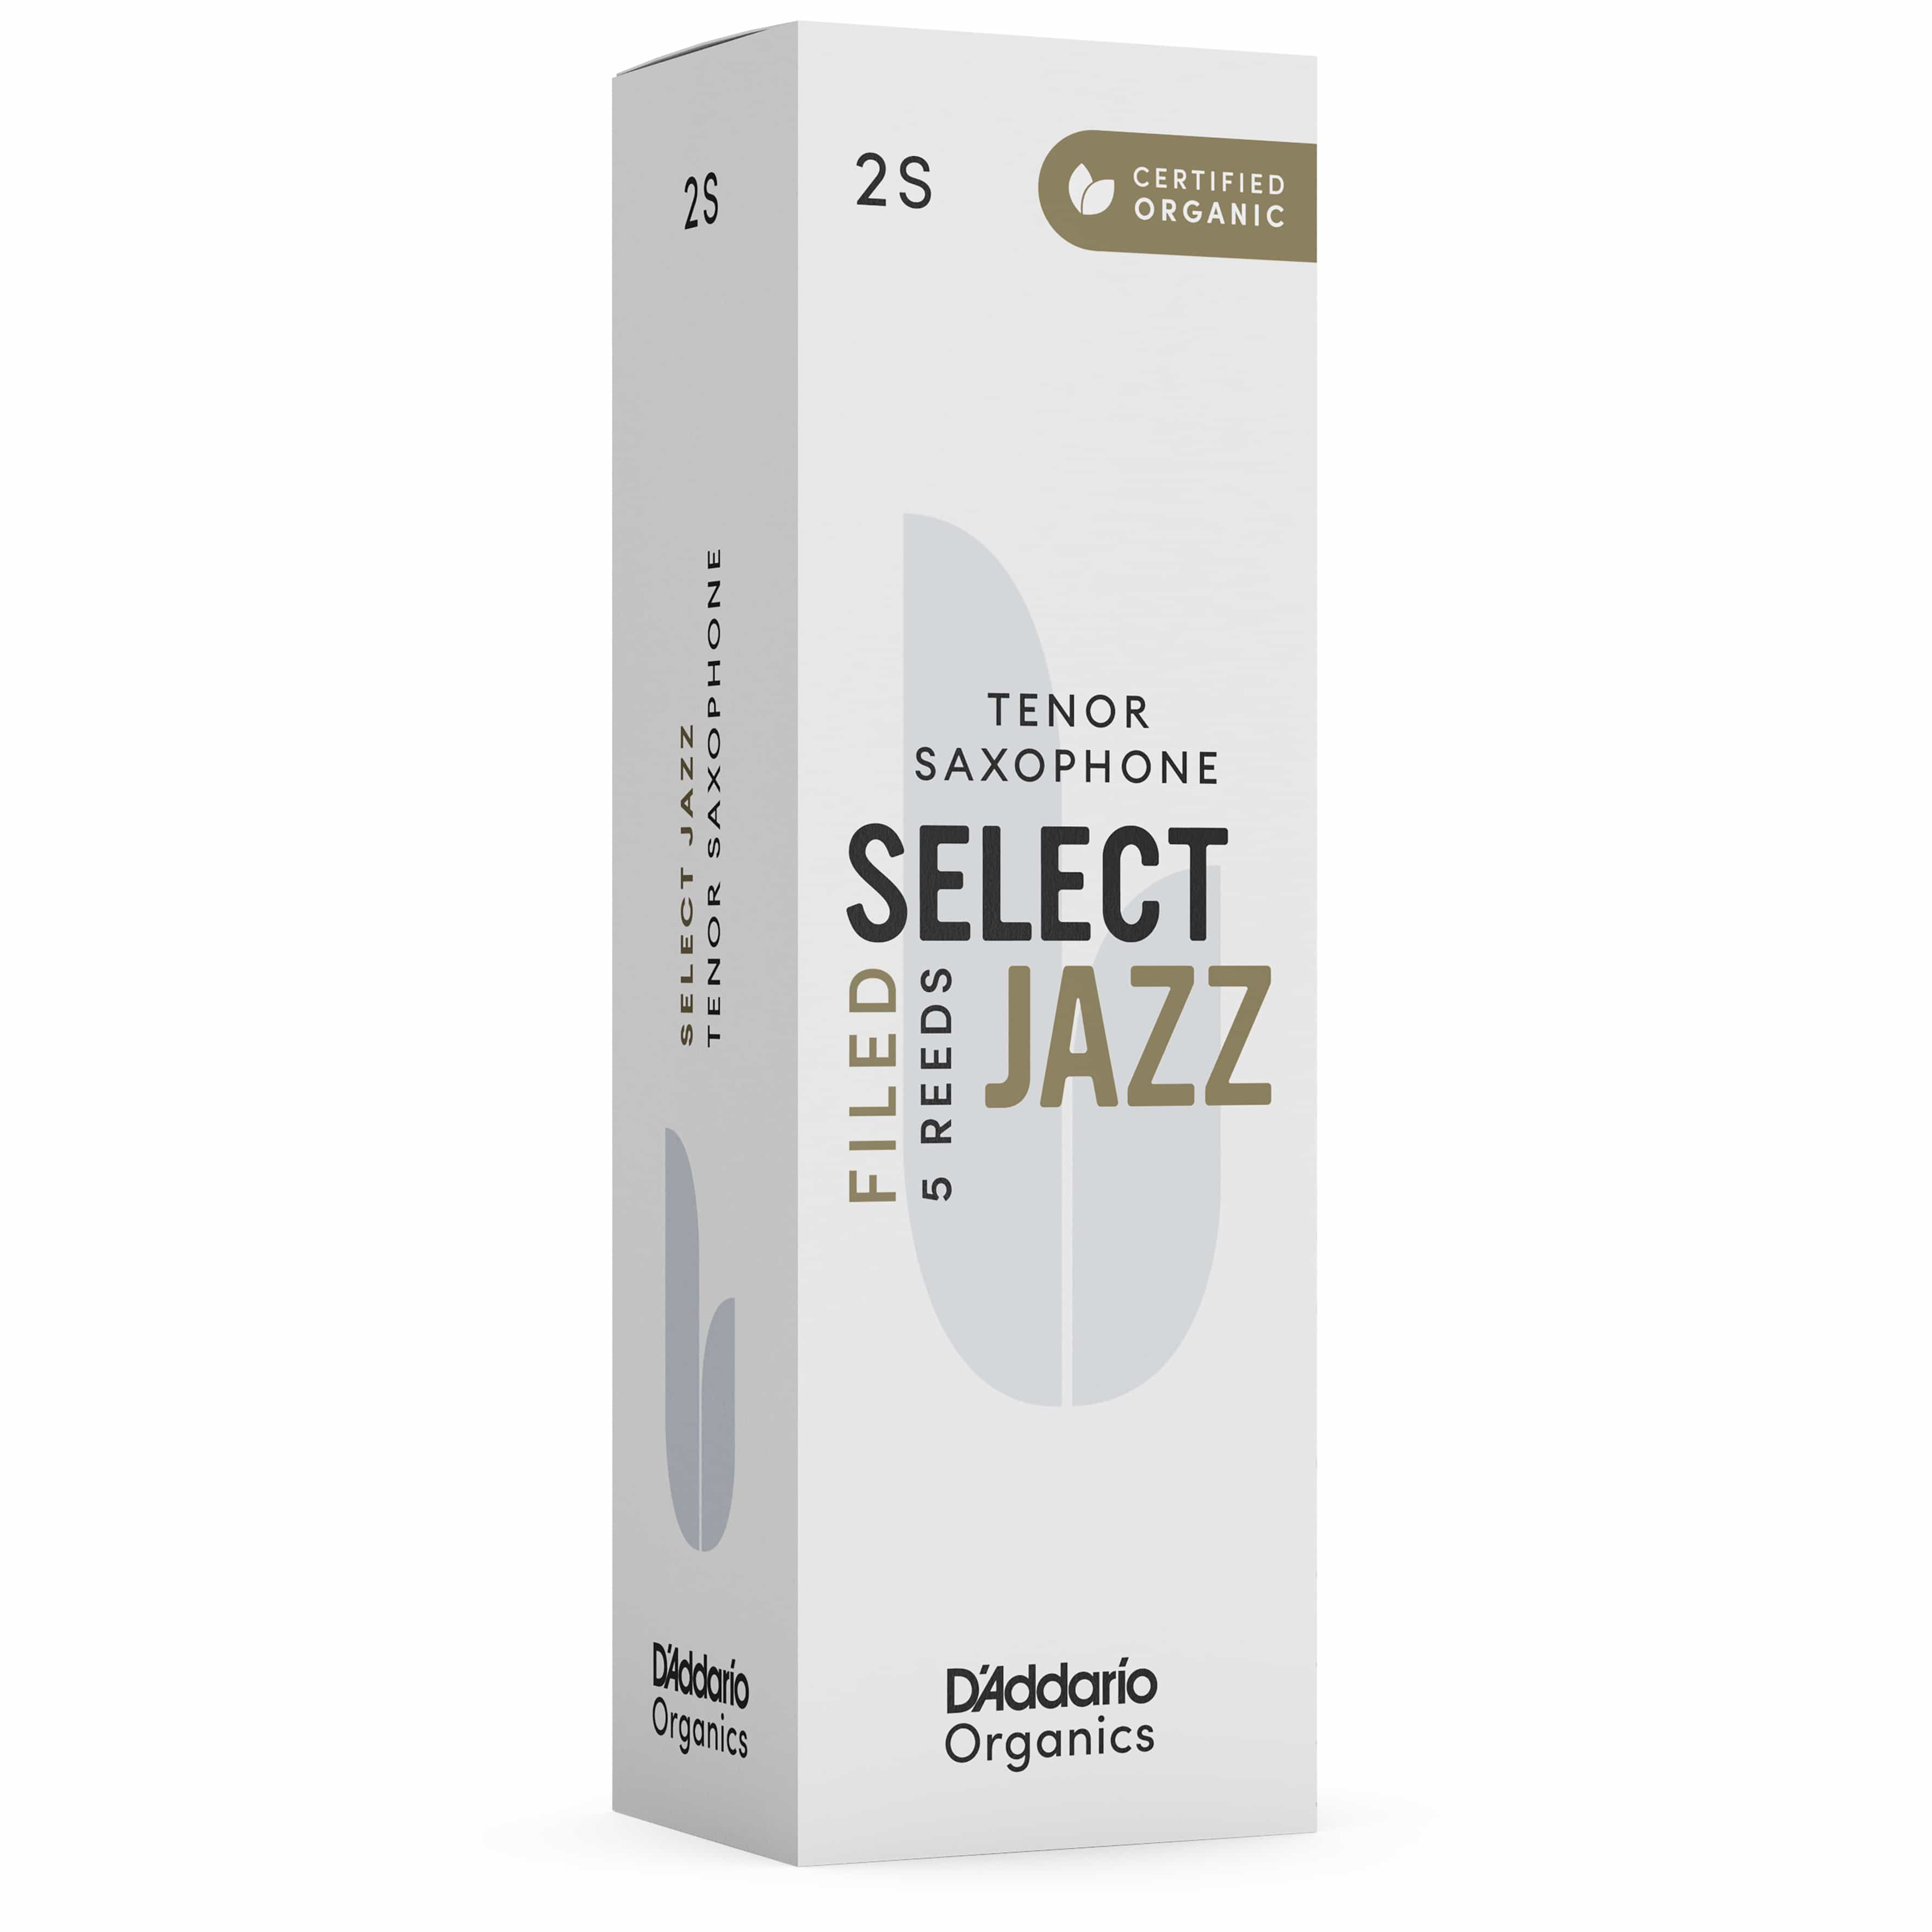 D’Addario Woodwinds Organic Select Jazz Filed - Tenor Saxophone 2S - 5er Pack 3